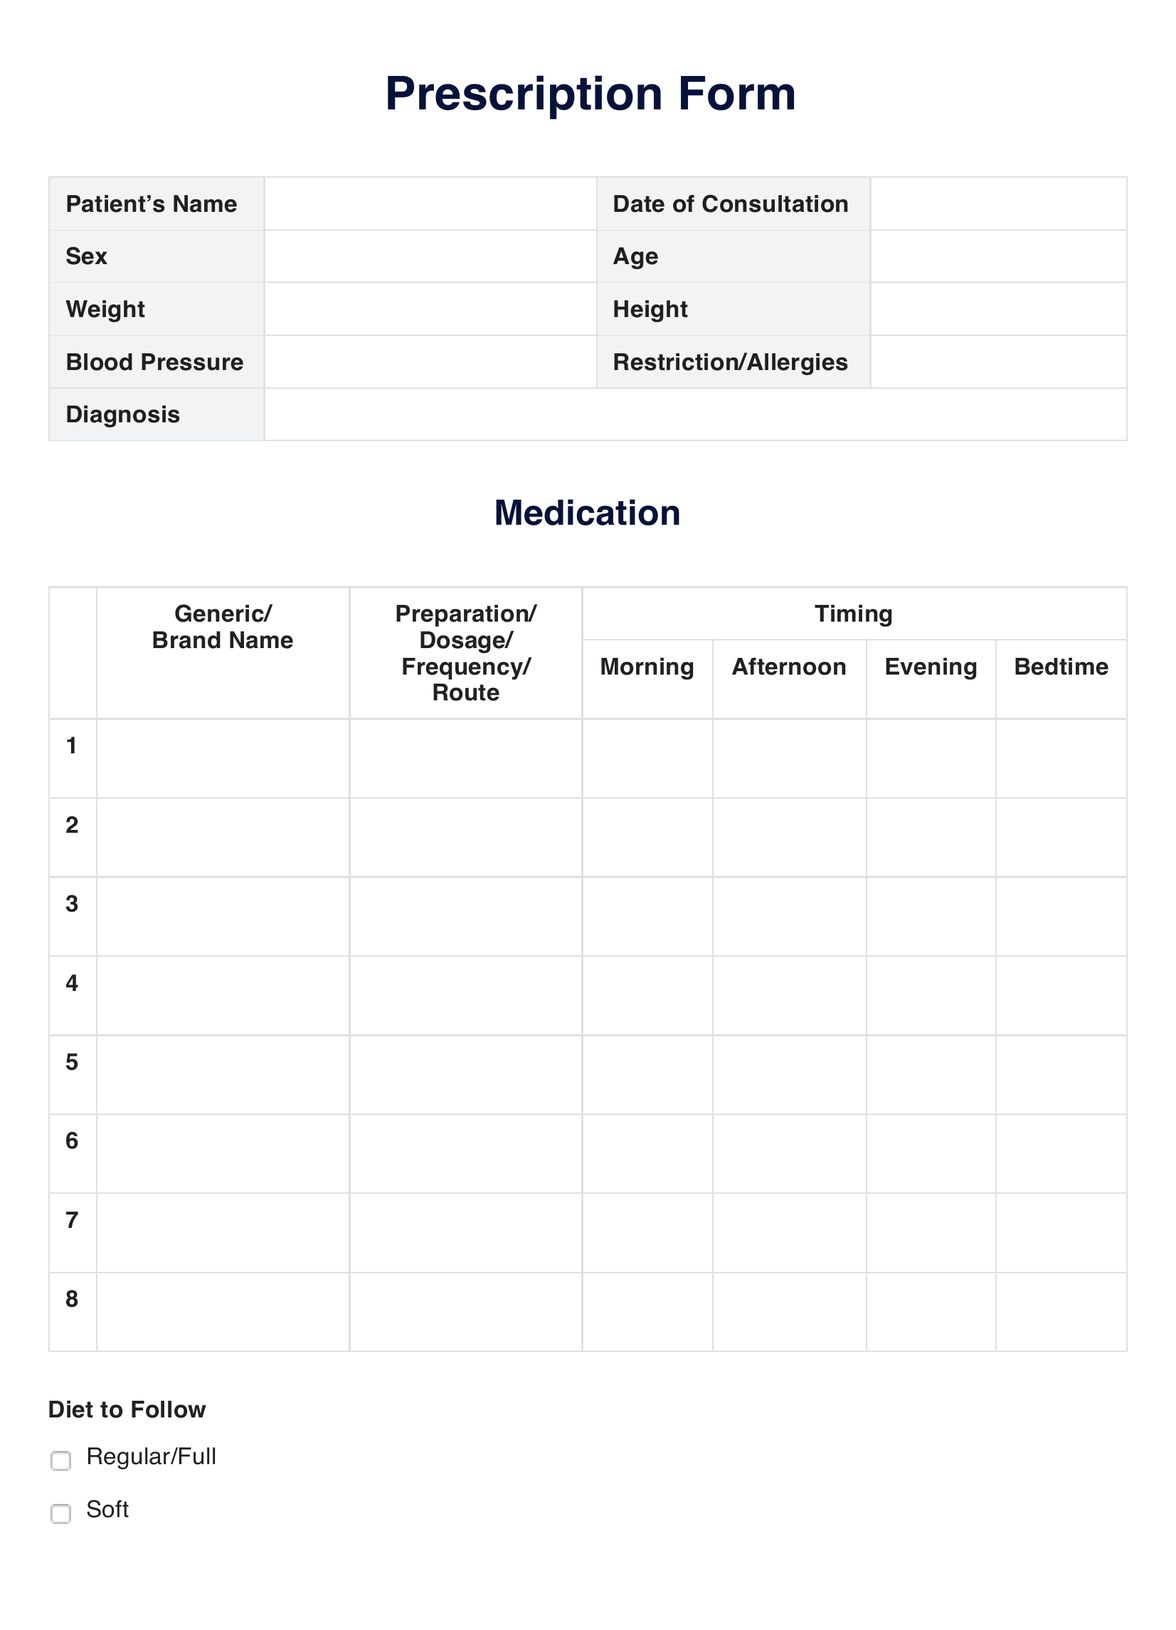 Prescription Form PDF Example